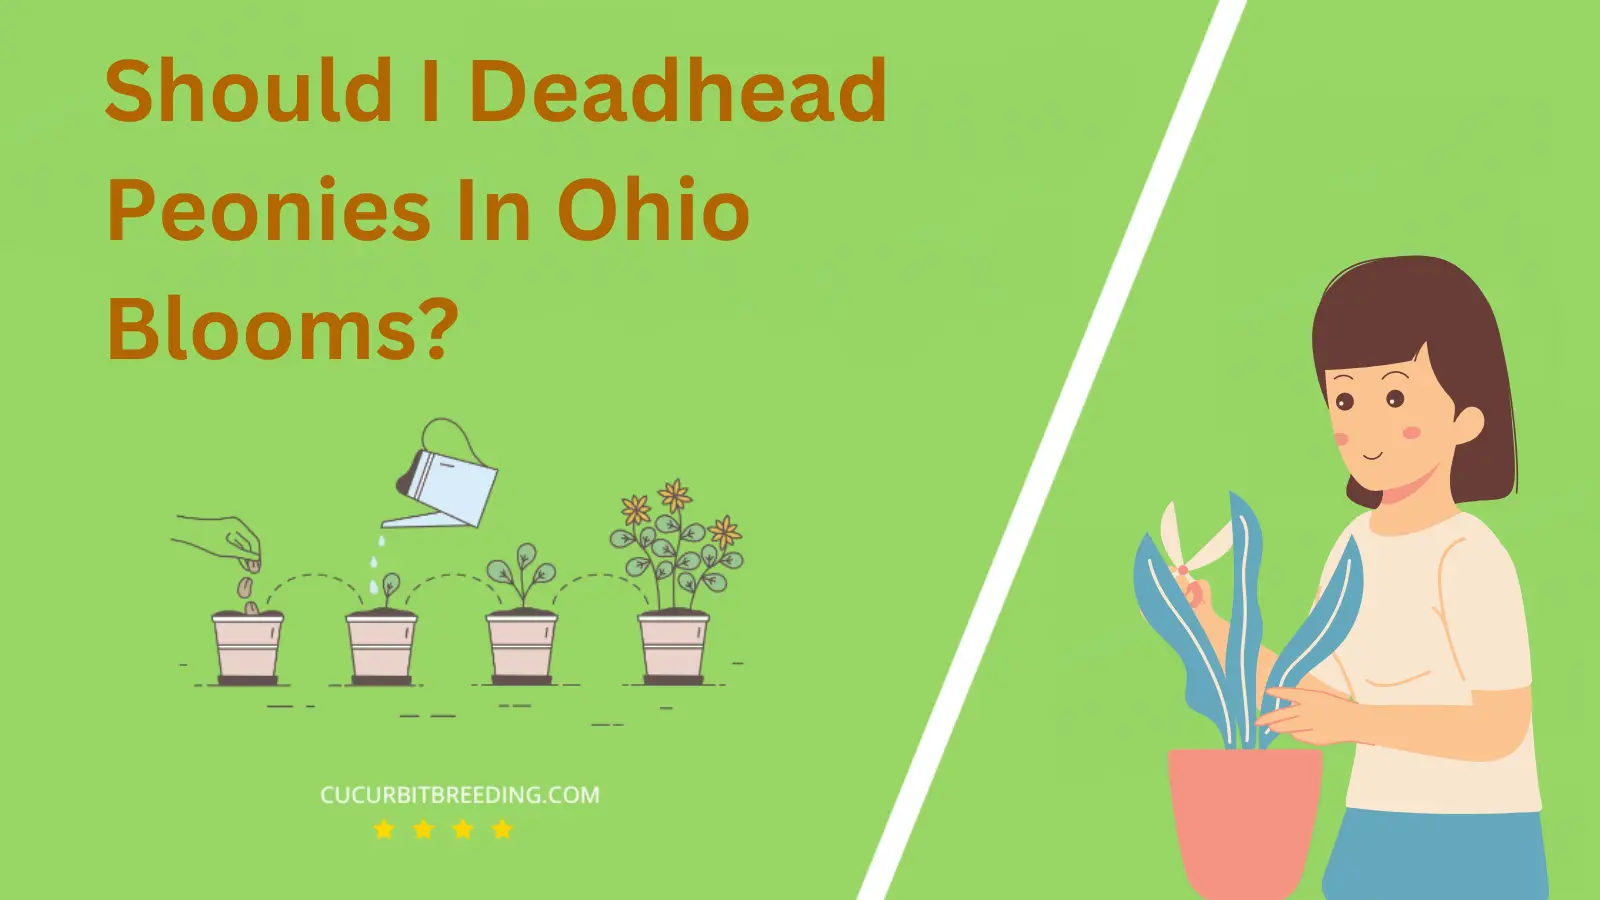 Should I Deadhead Peonies In Ohio Blooms?